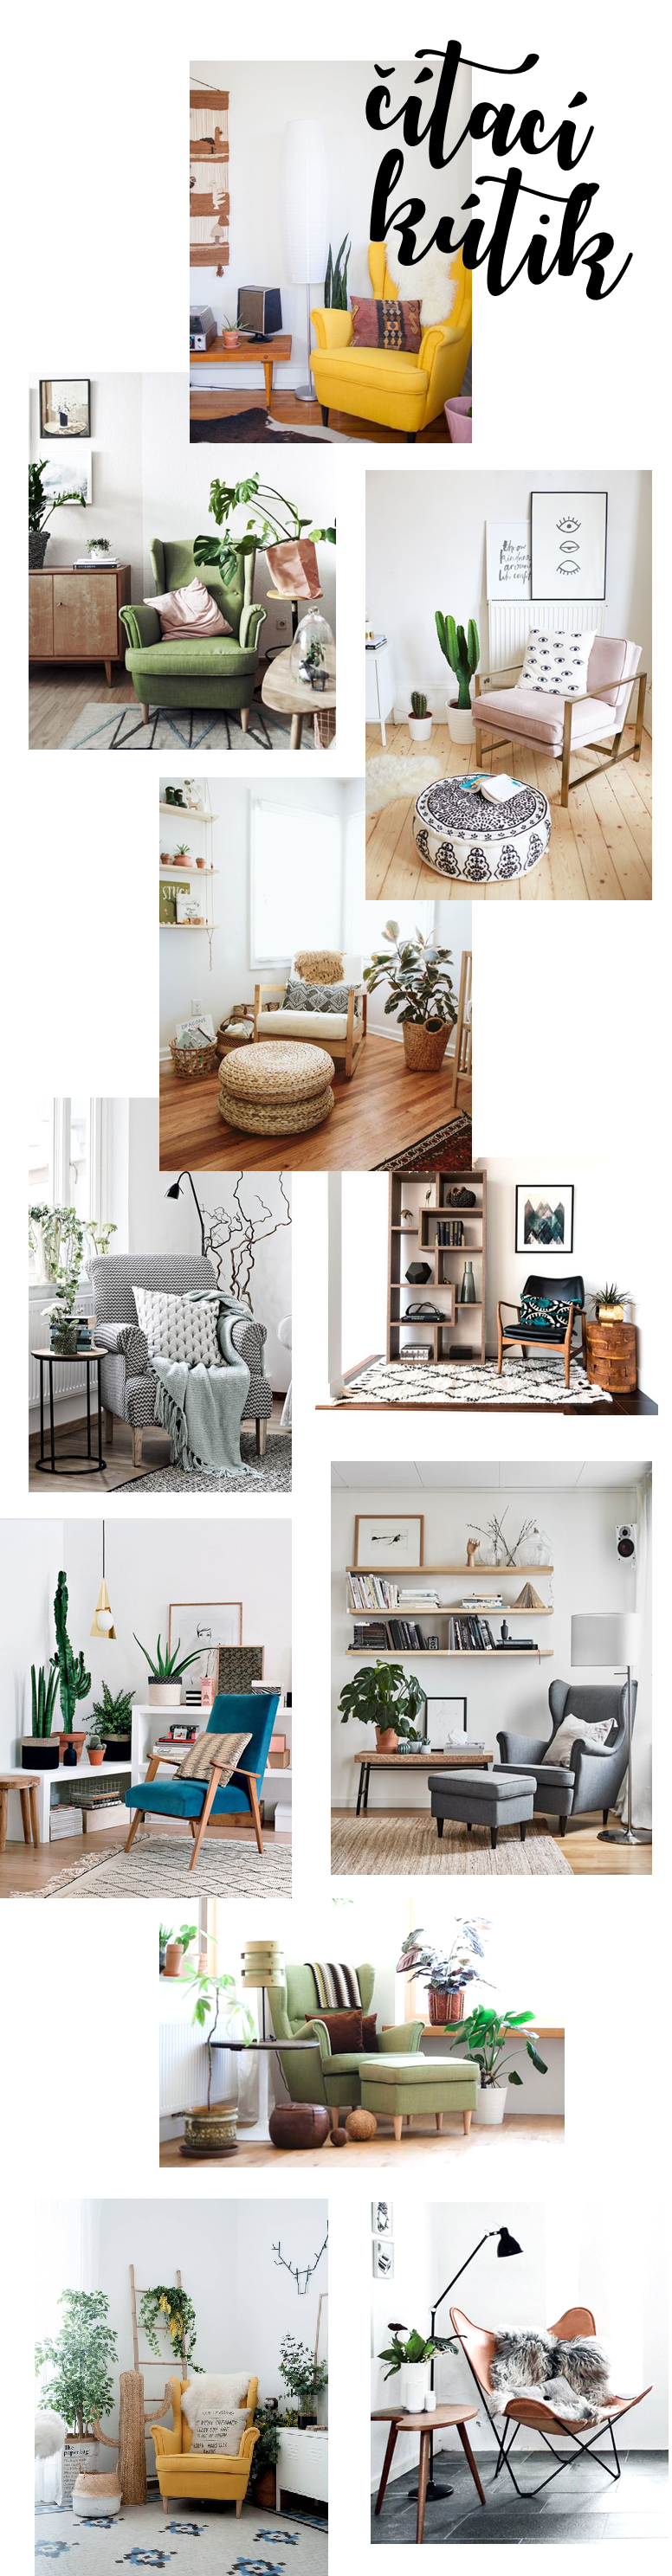 interior_living room_readingcorner